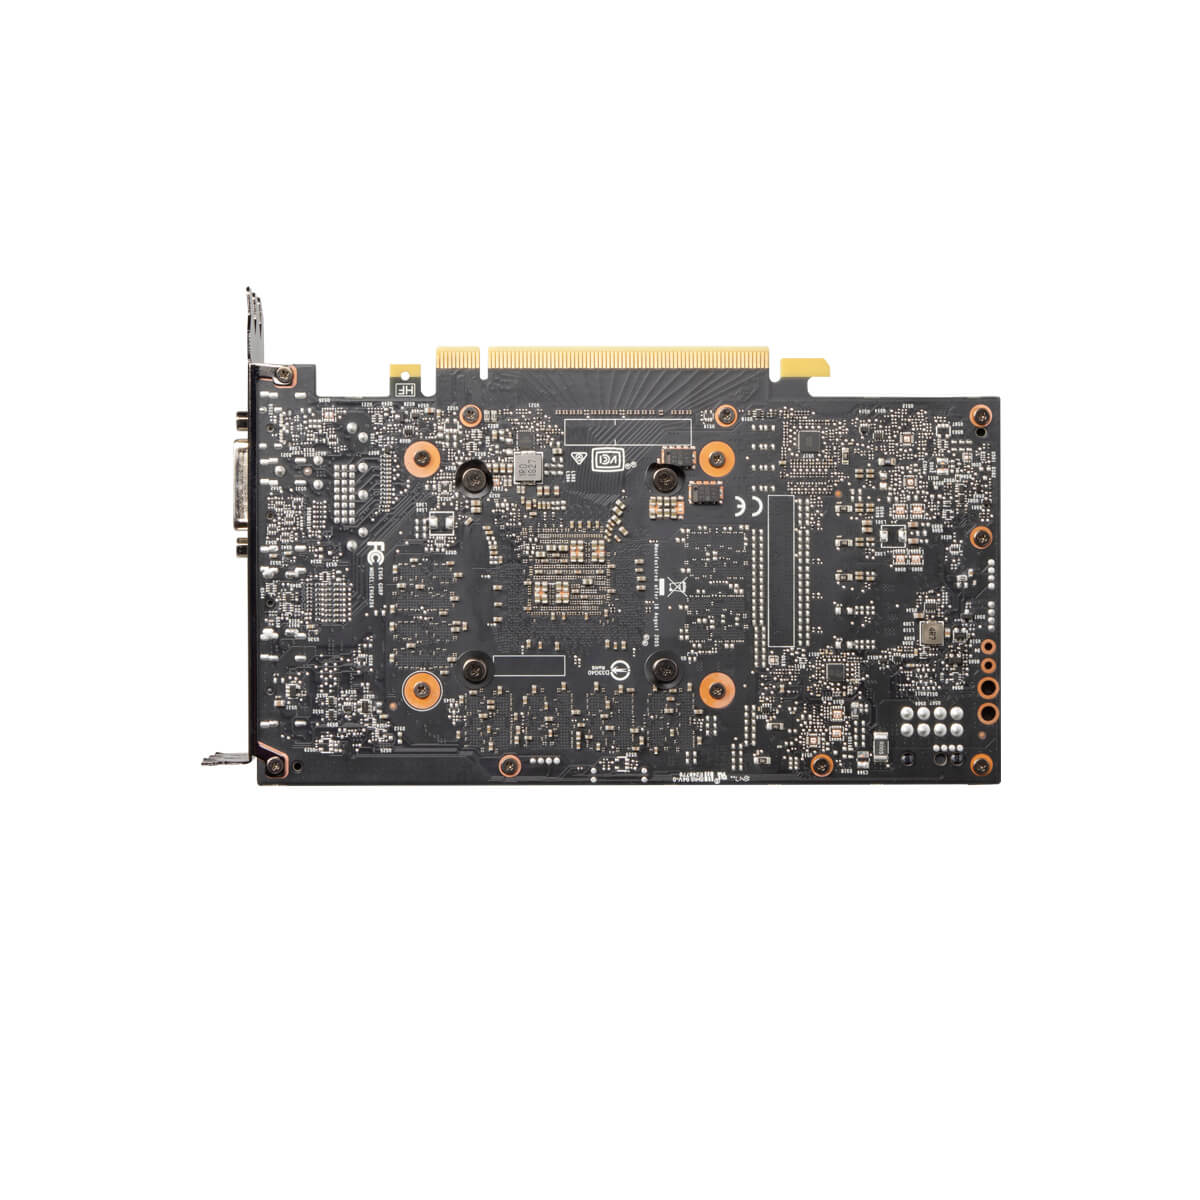 EVGA GeForce RTX 2060 XC GAMING